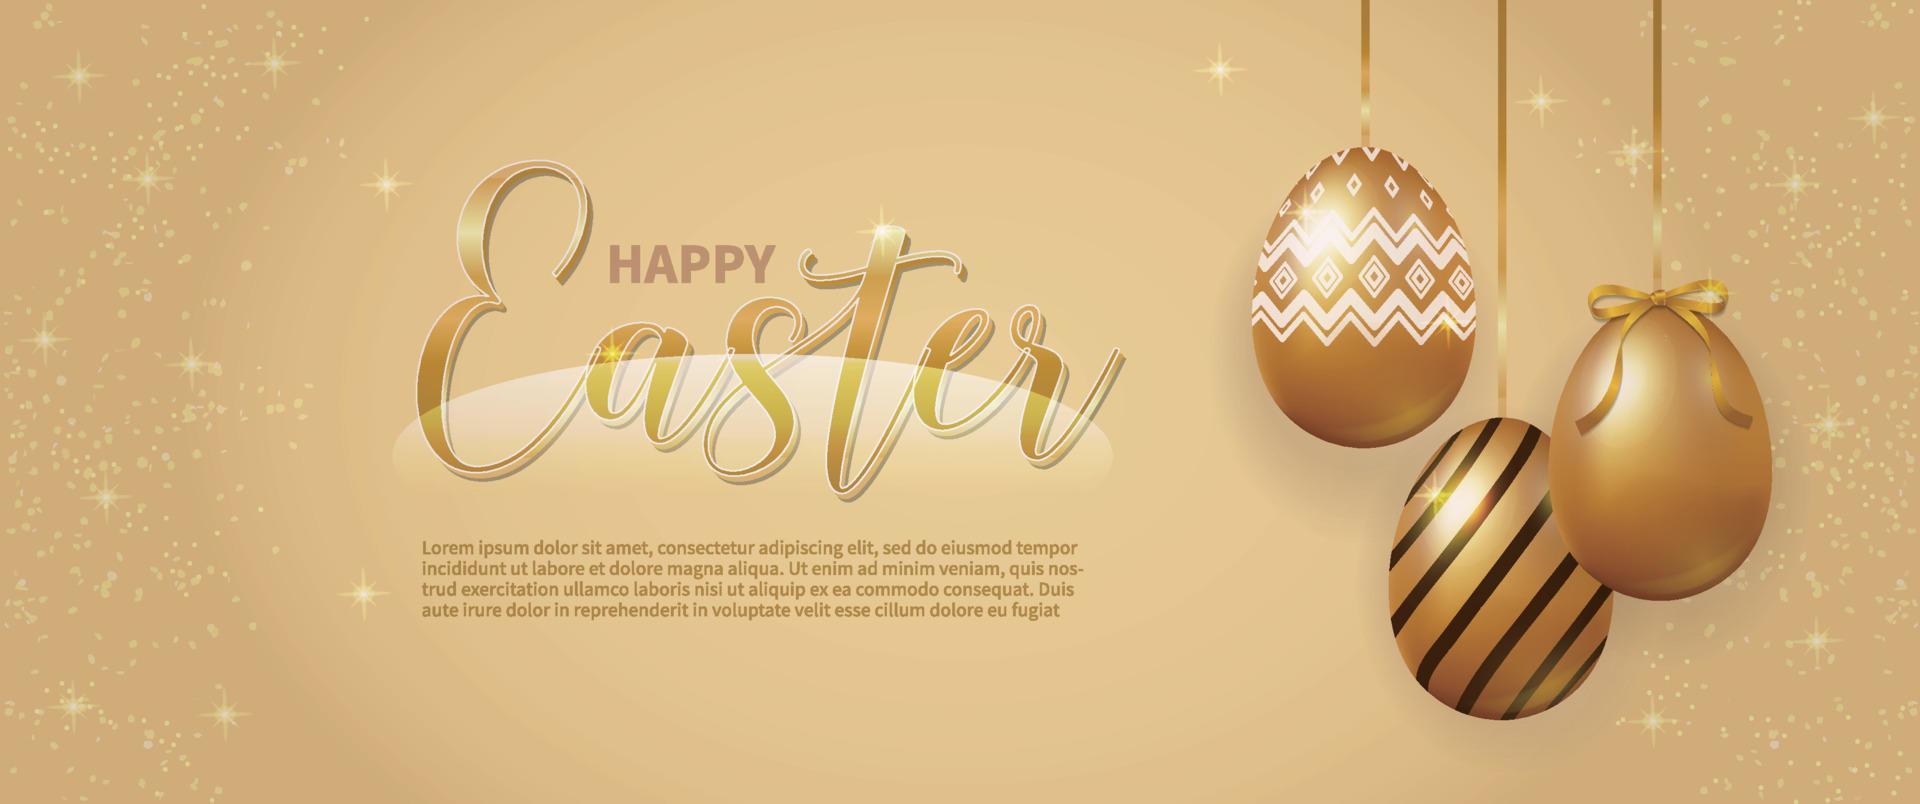 Golden happy easter egg banner vector